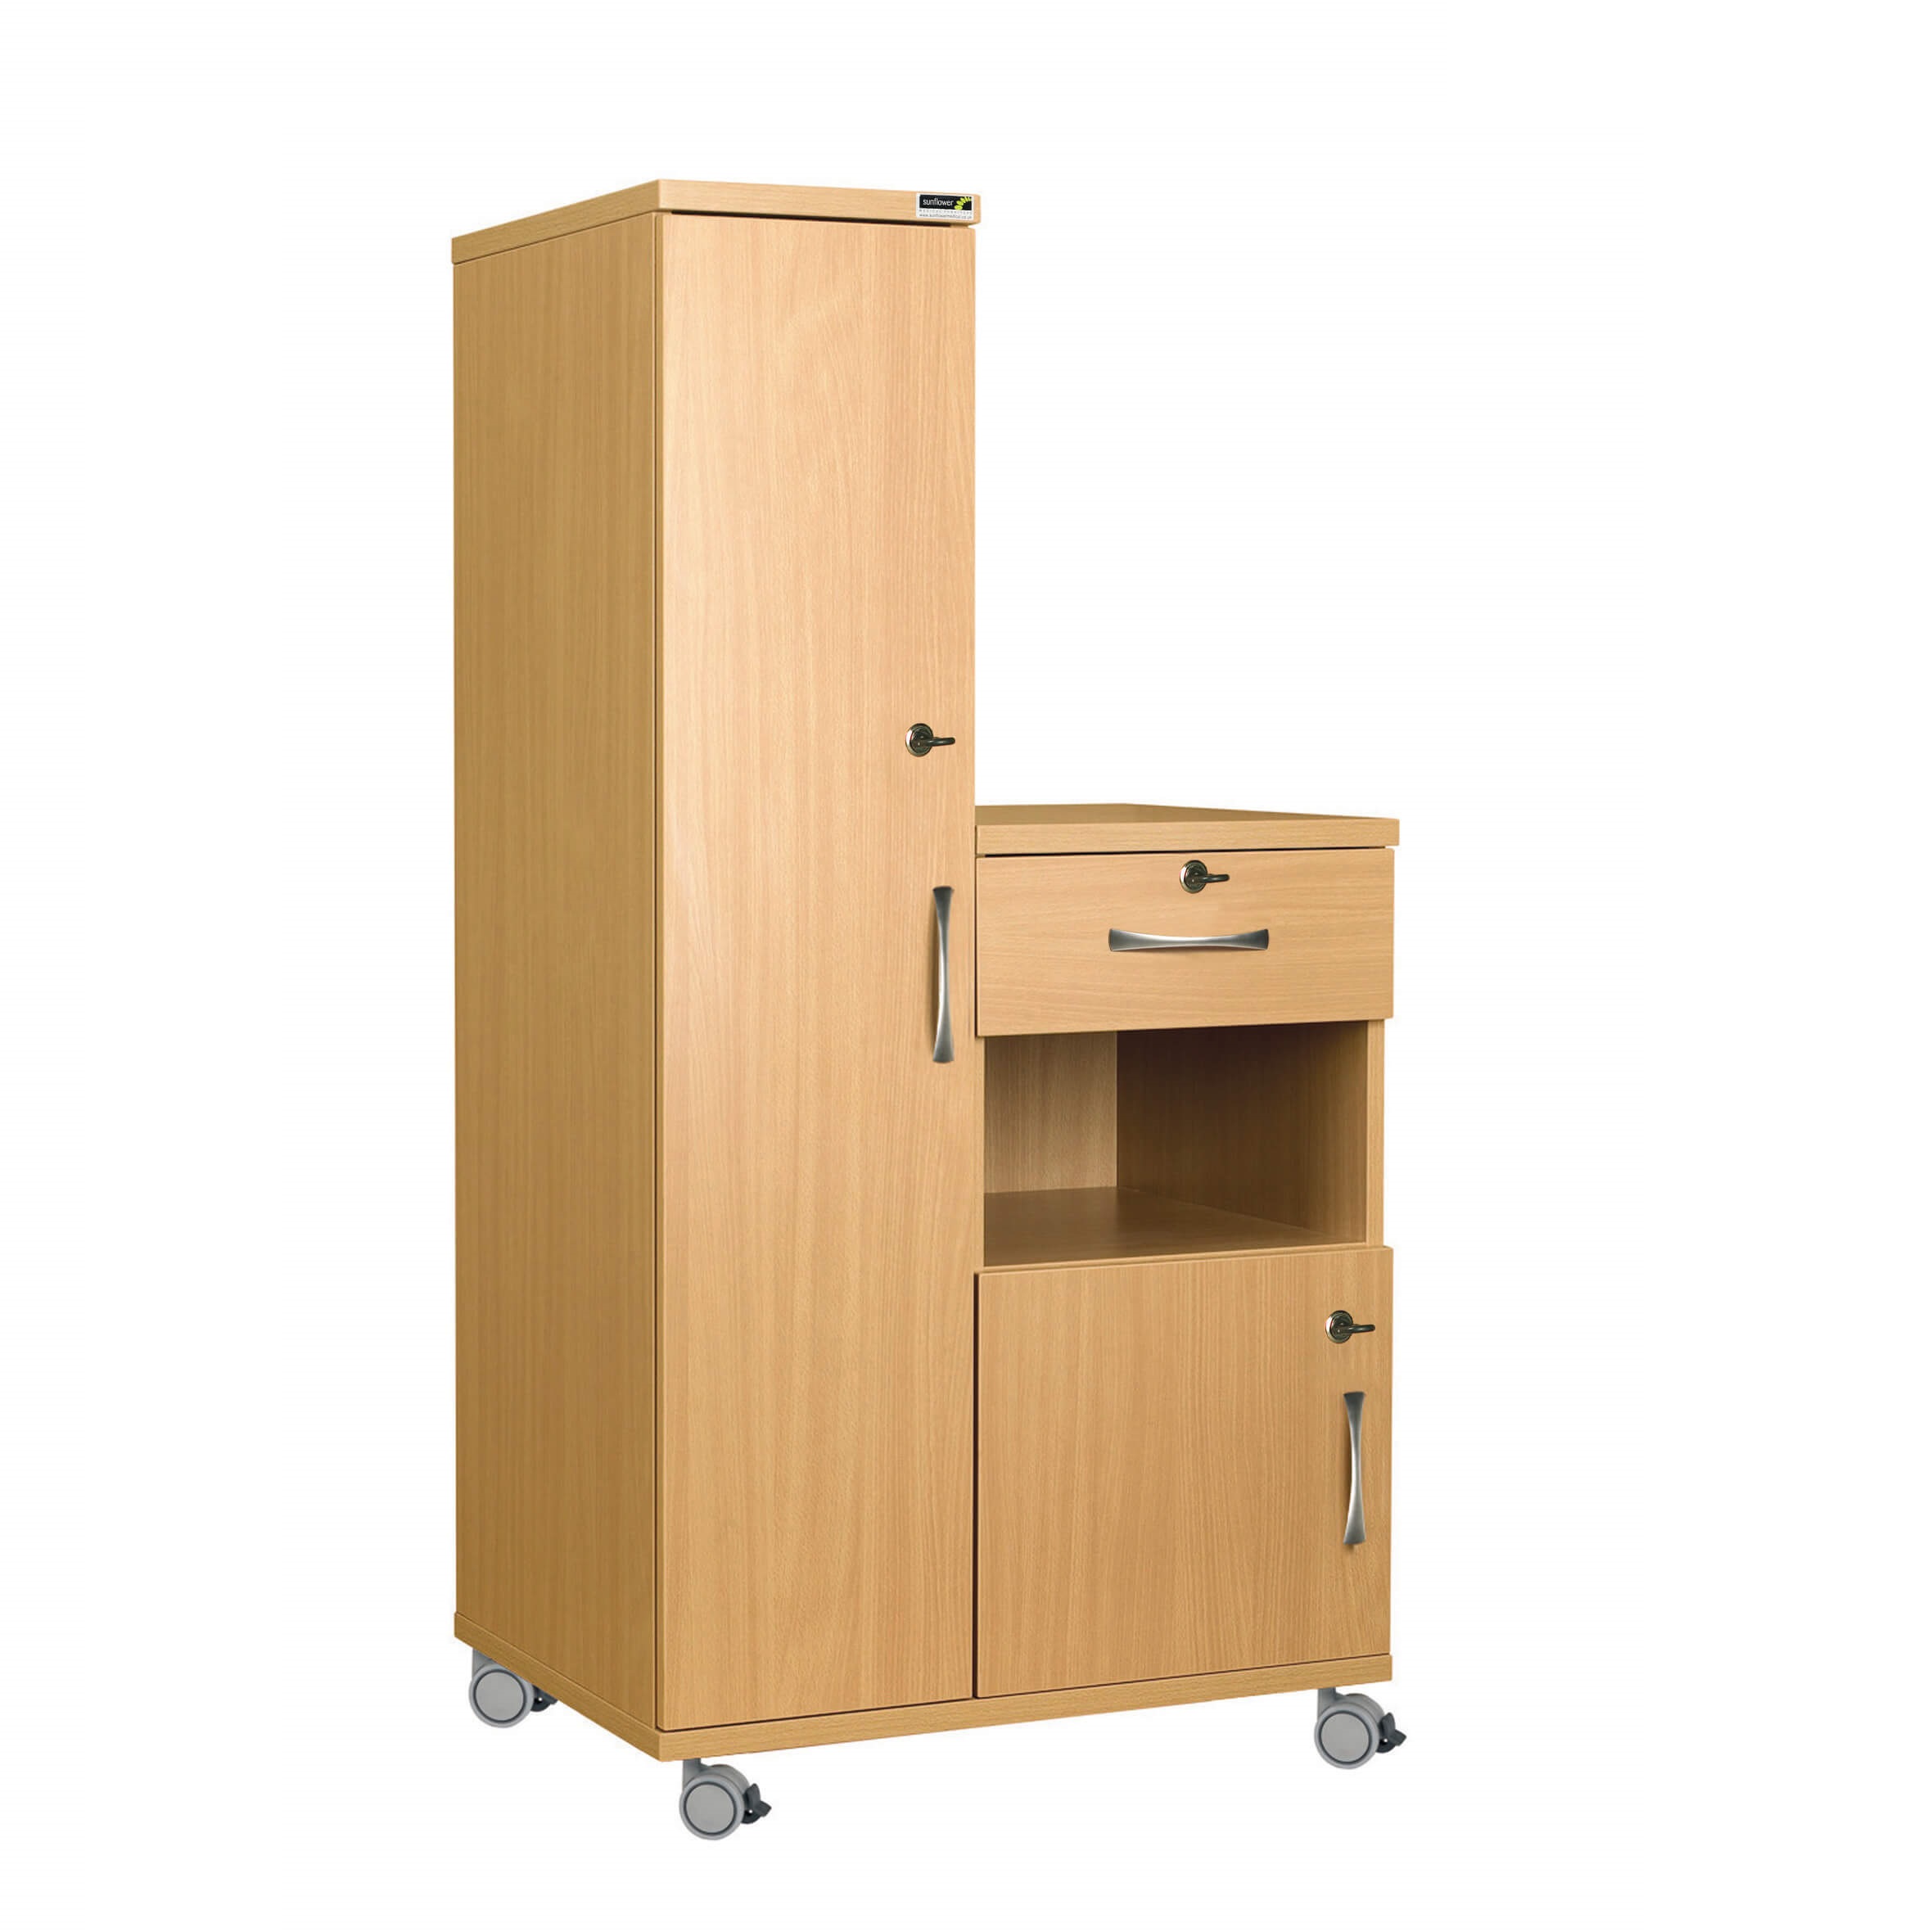 Left Hand Bedside Cabinet Combination Unit with Locks - MFC Material [Sun-CBHBC4-MFC-LOCKS]